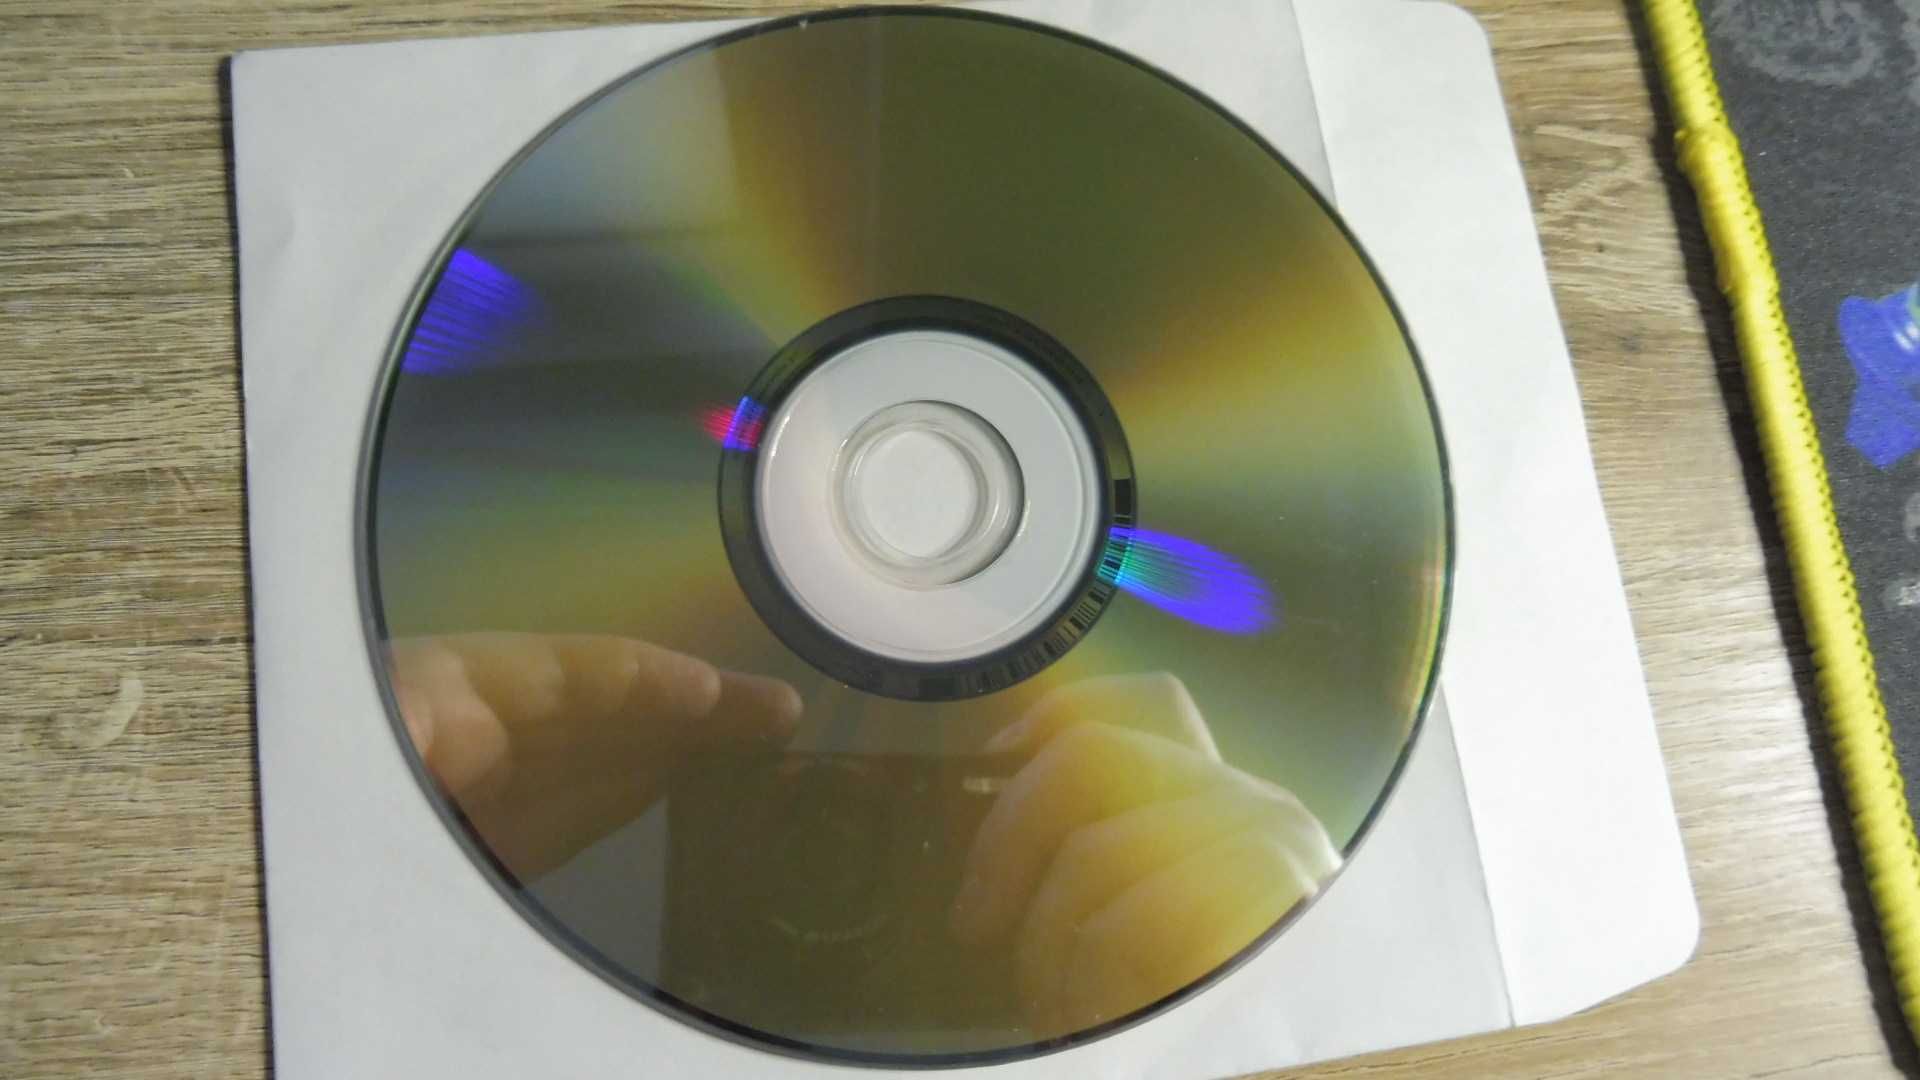 CD Action 06/2006 - Legecy of Kain, Black Mirror, Thief 2